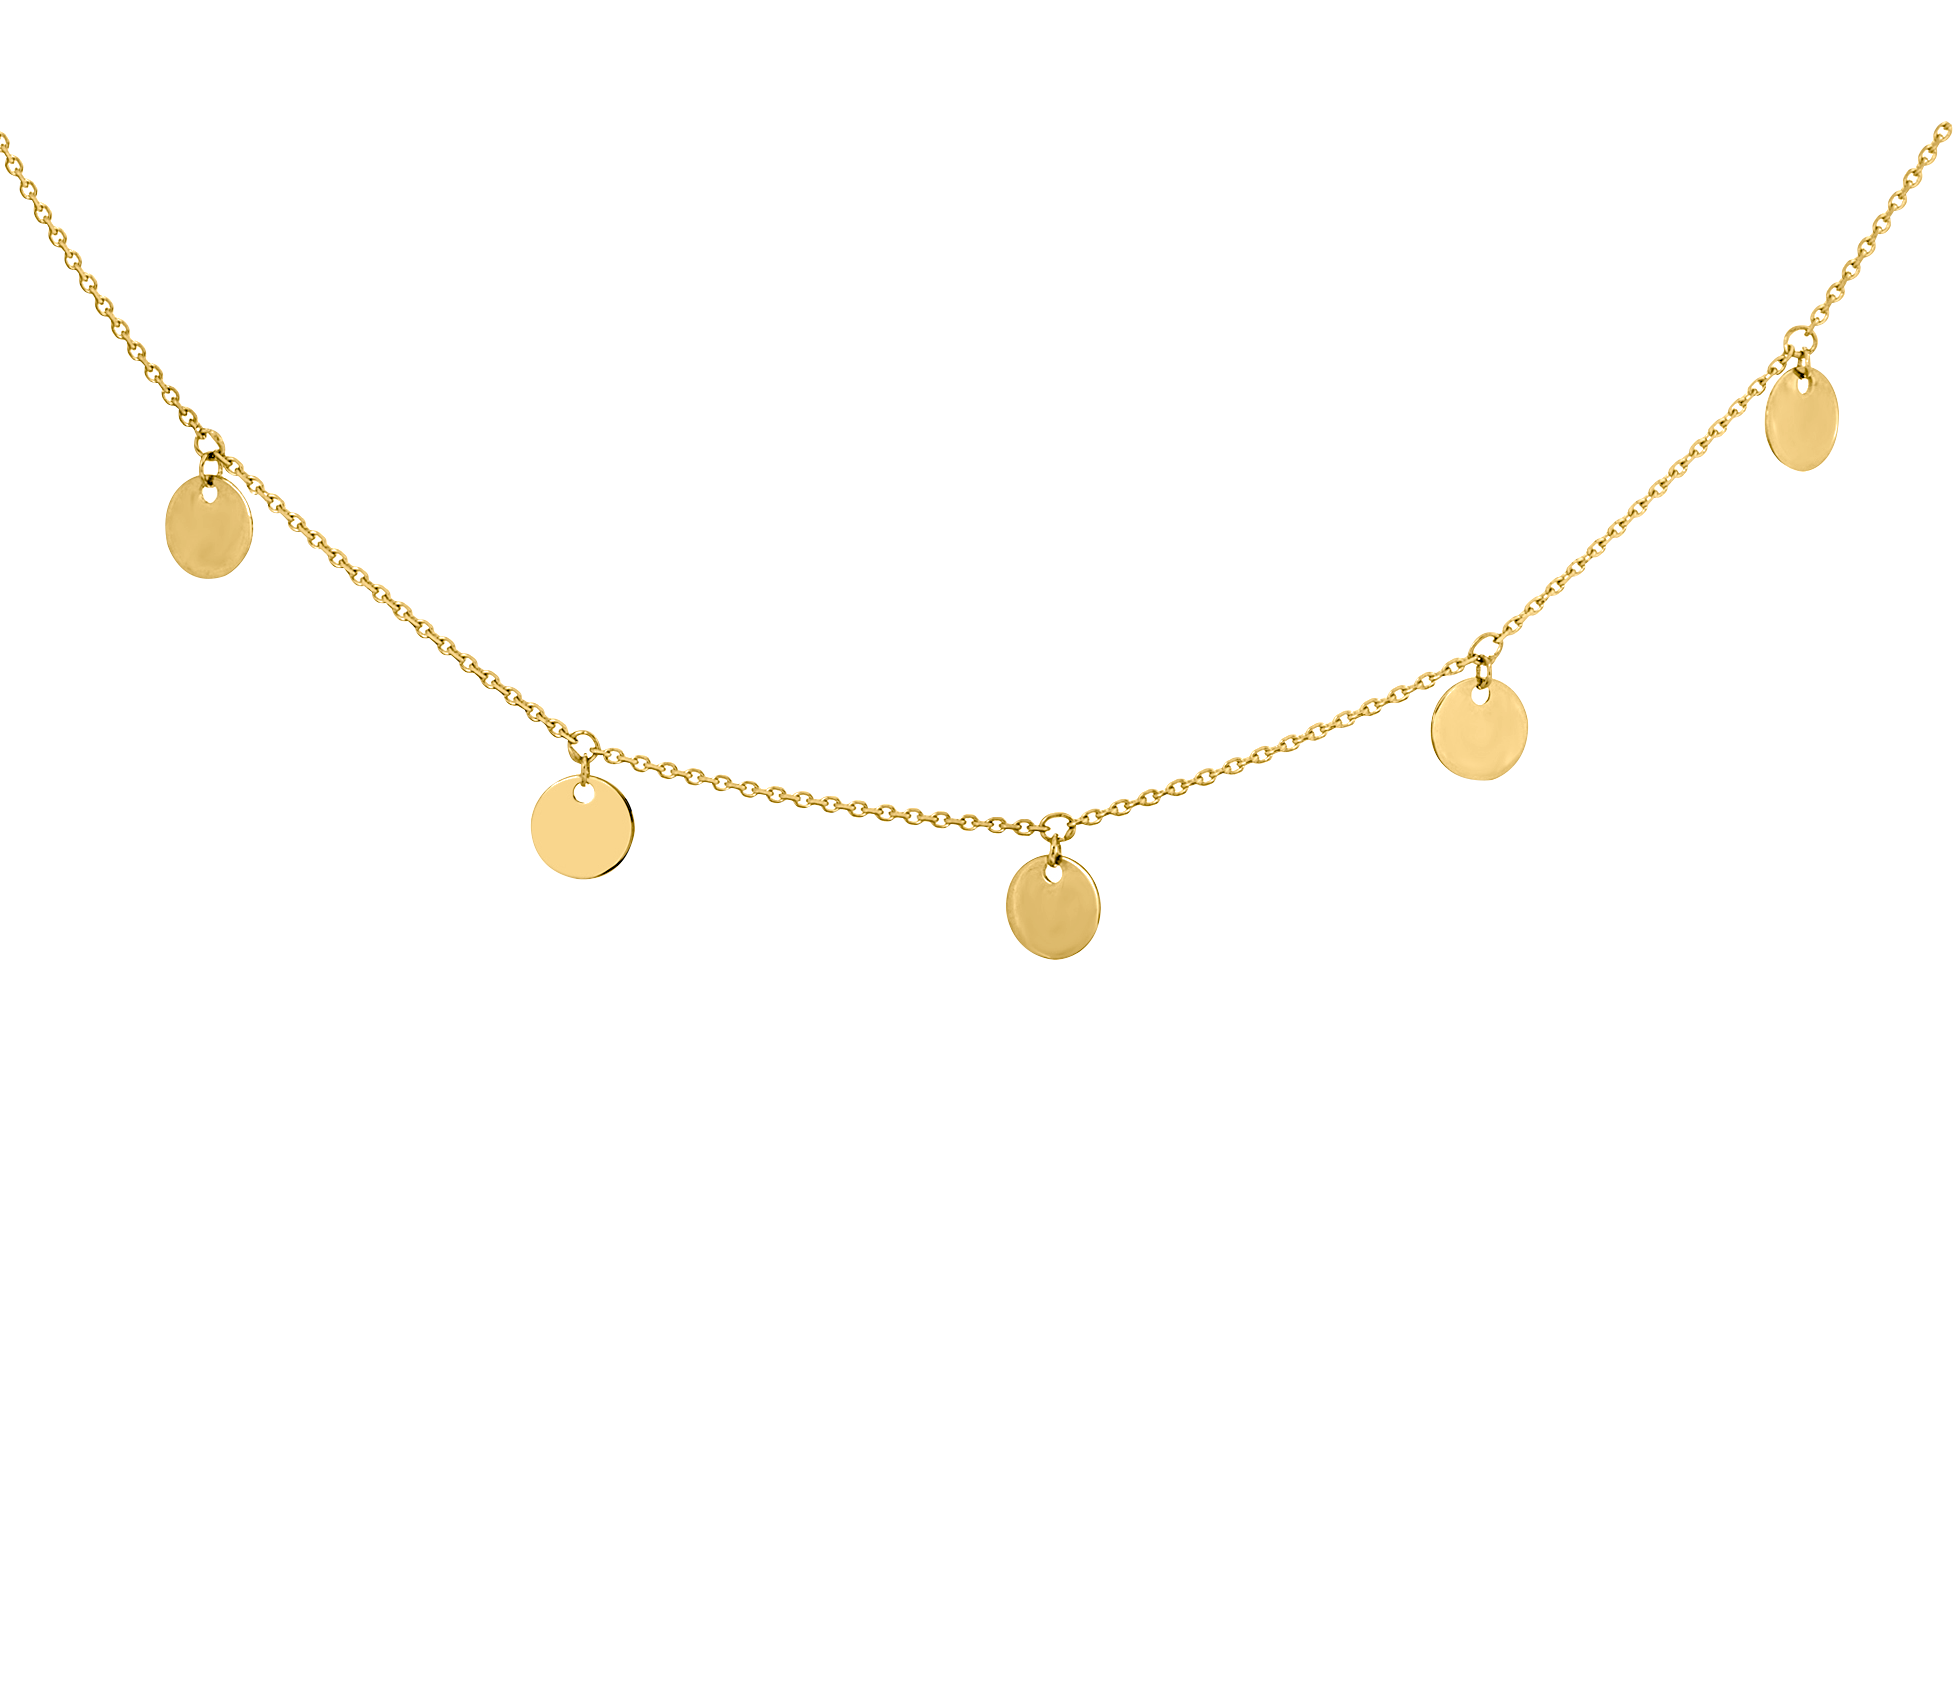 Black and Gold Clover Necklace – Michael E. Minden Diamond